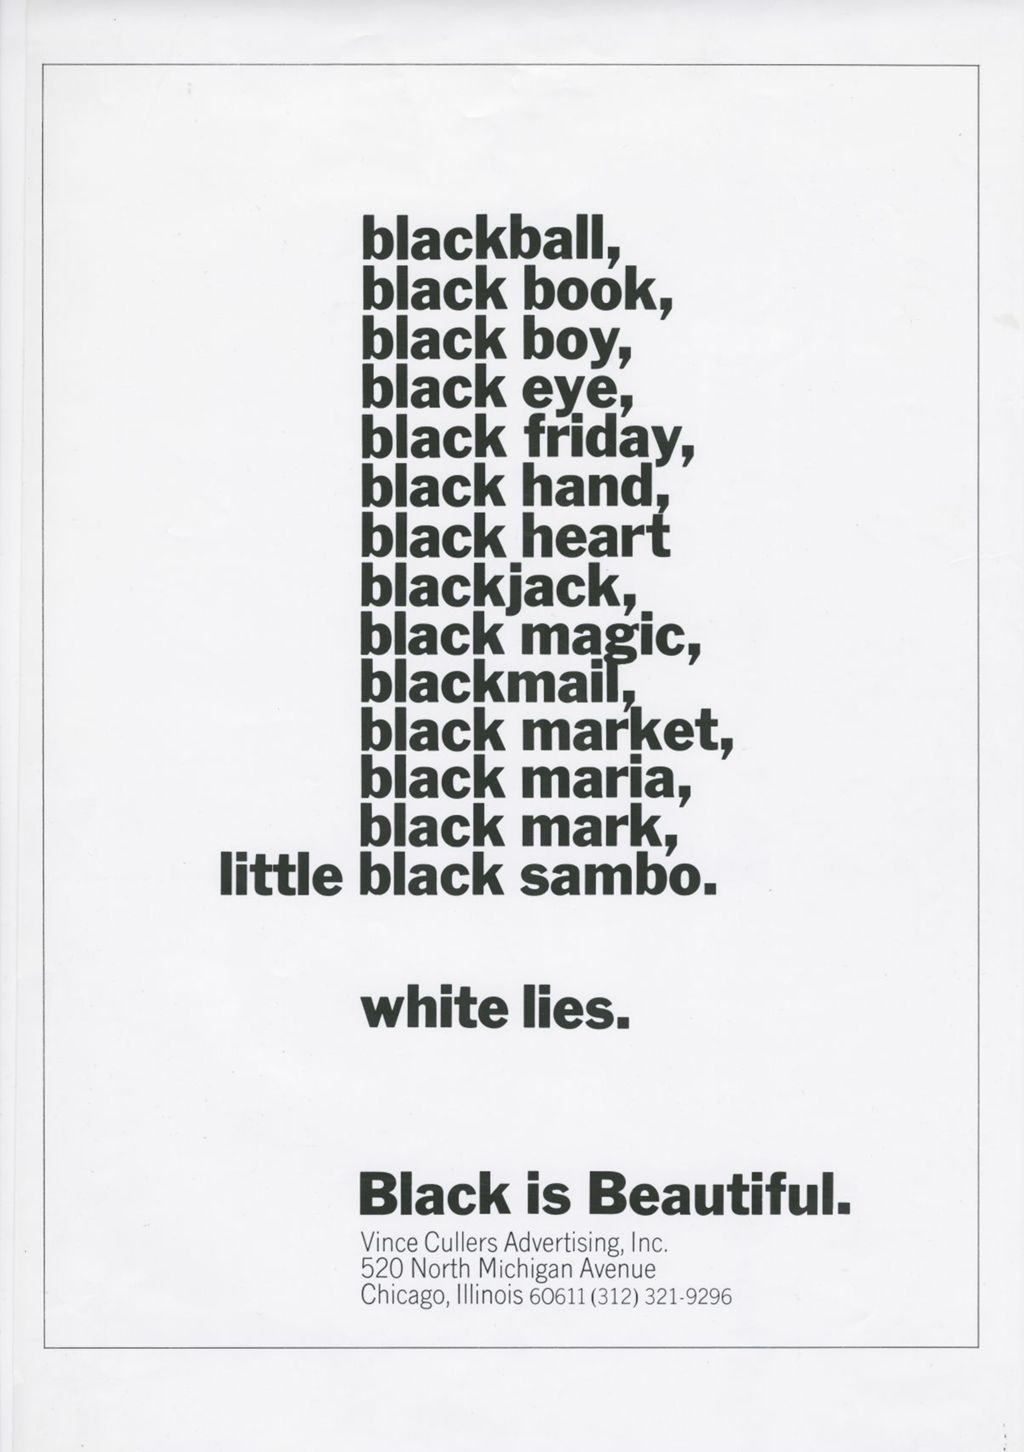 Black is Beautiful advertisement